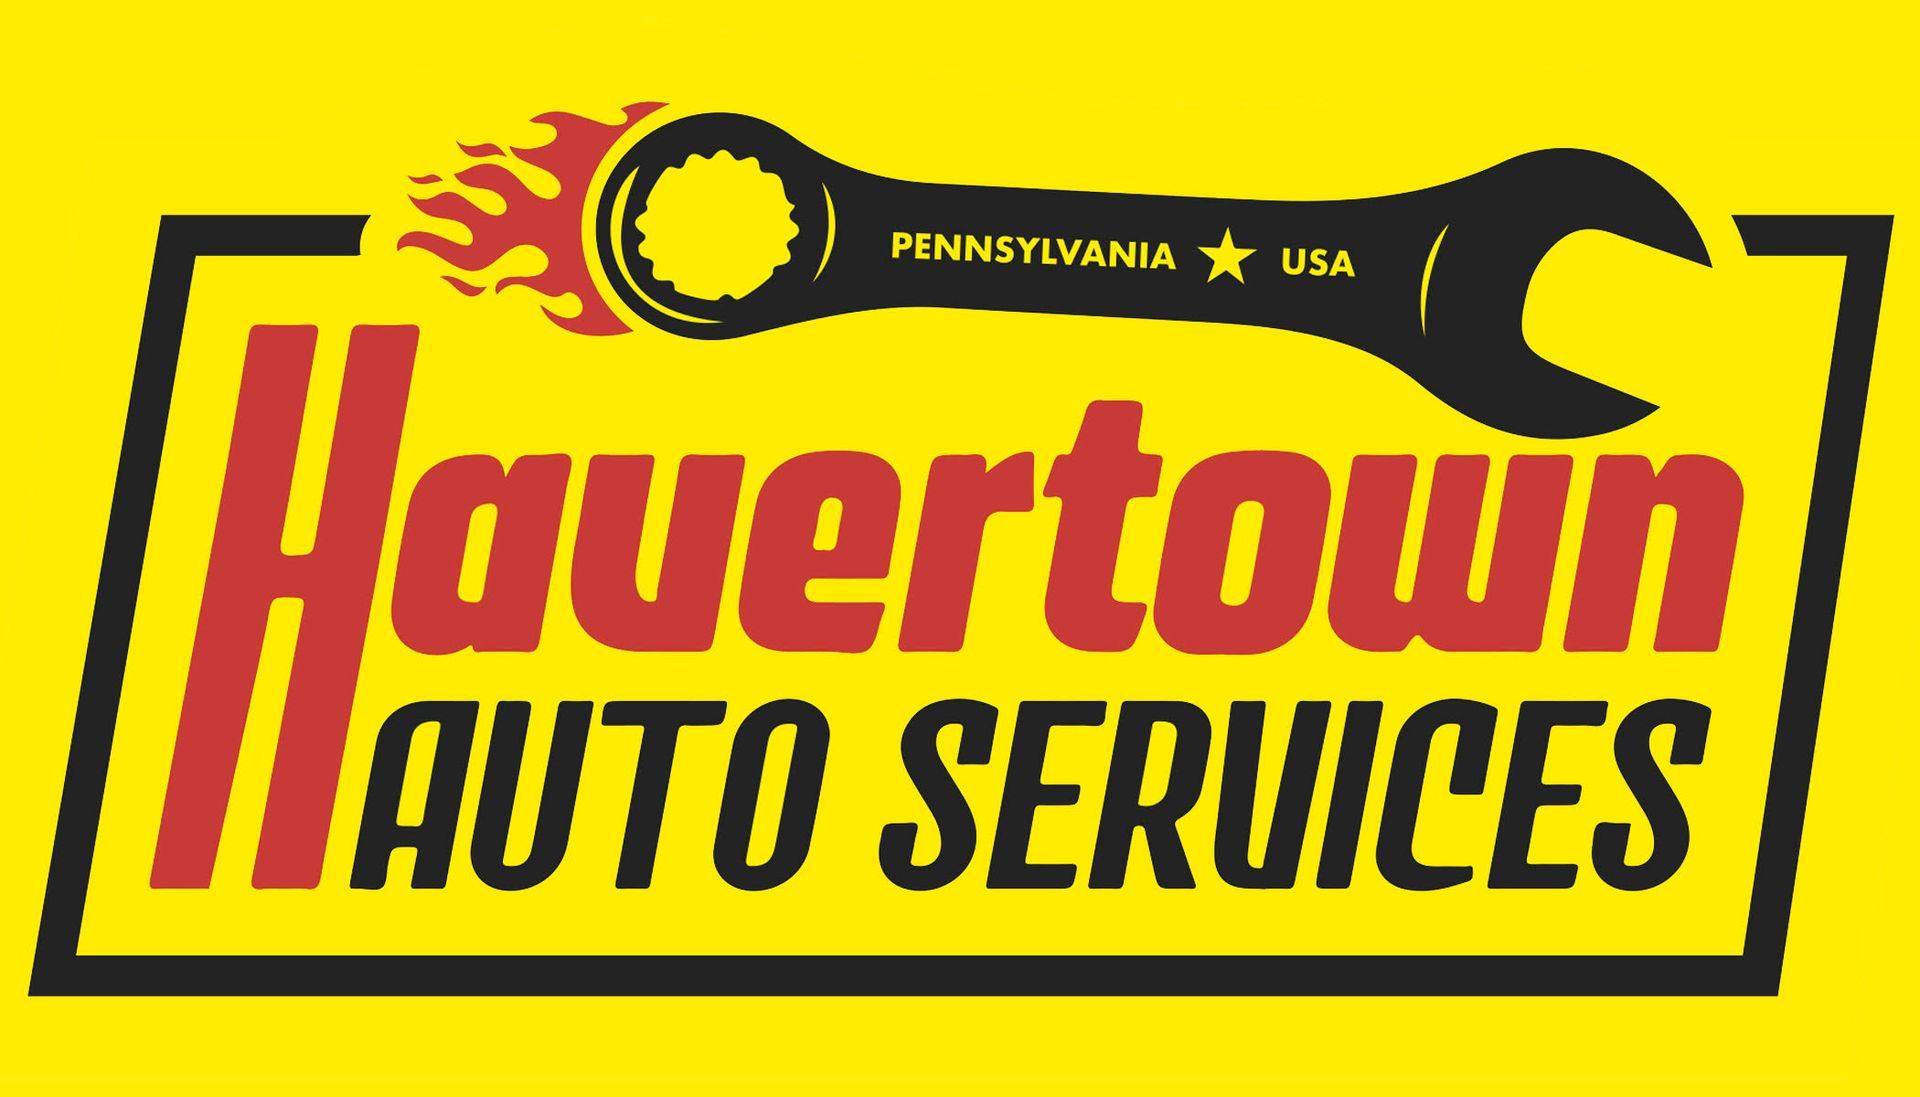 Havertown Auto Services logo